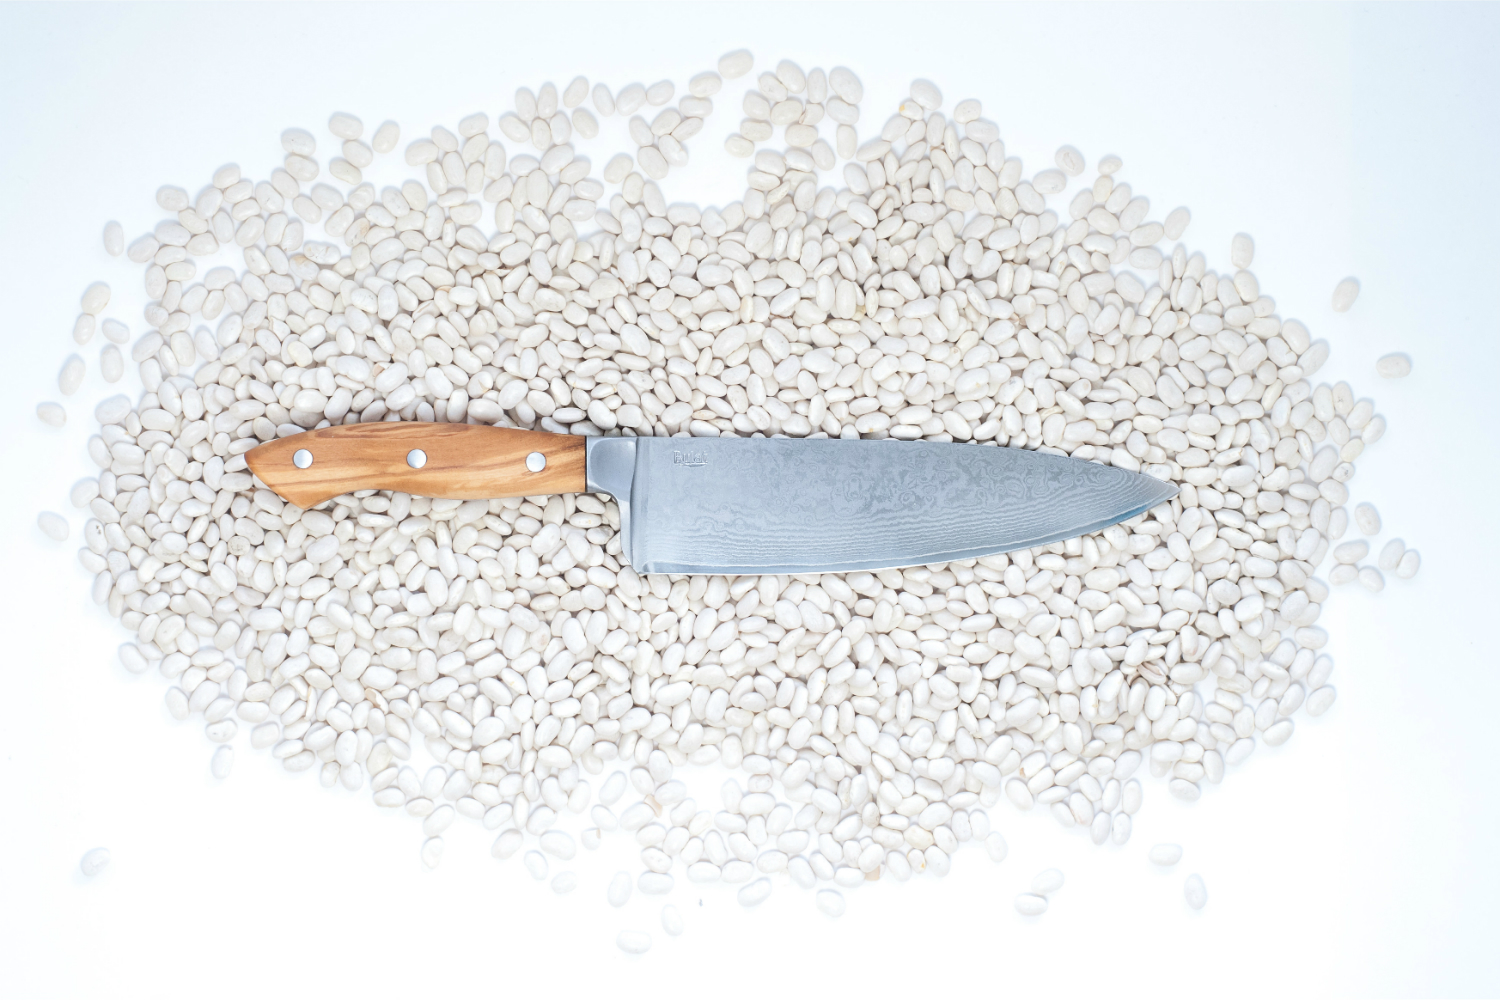 bulat chef knife kickstarter 5